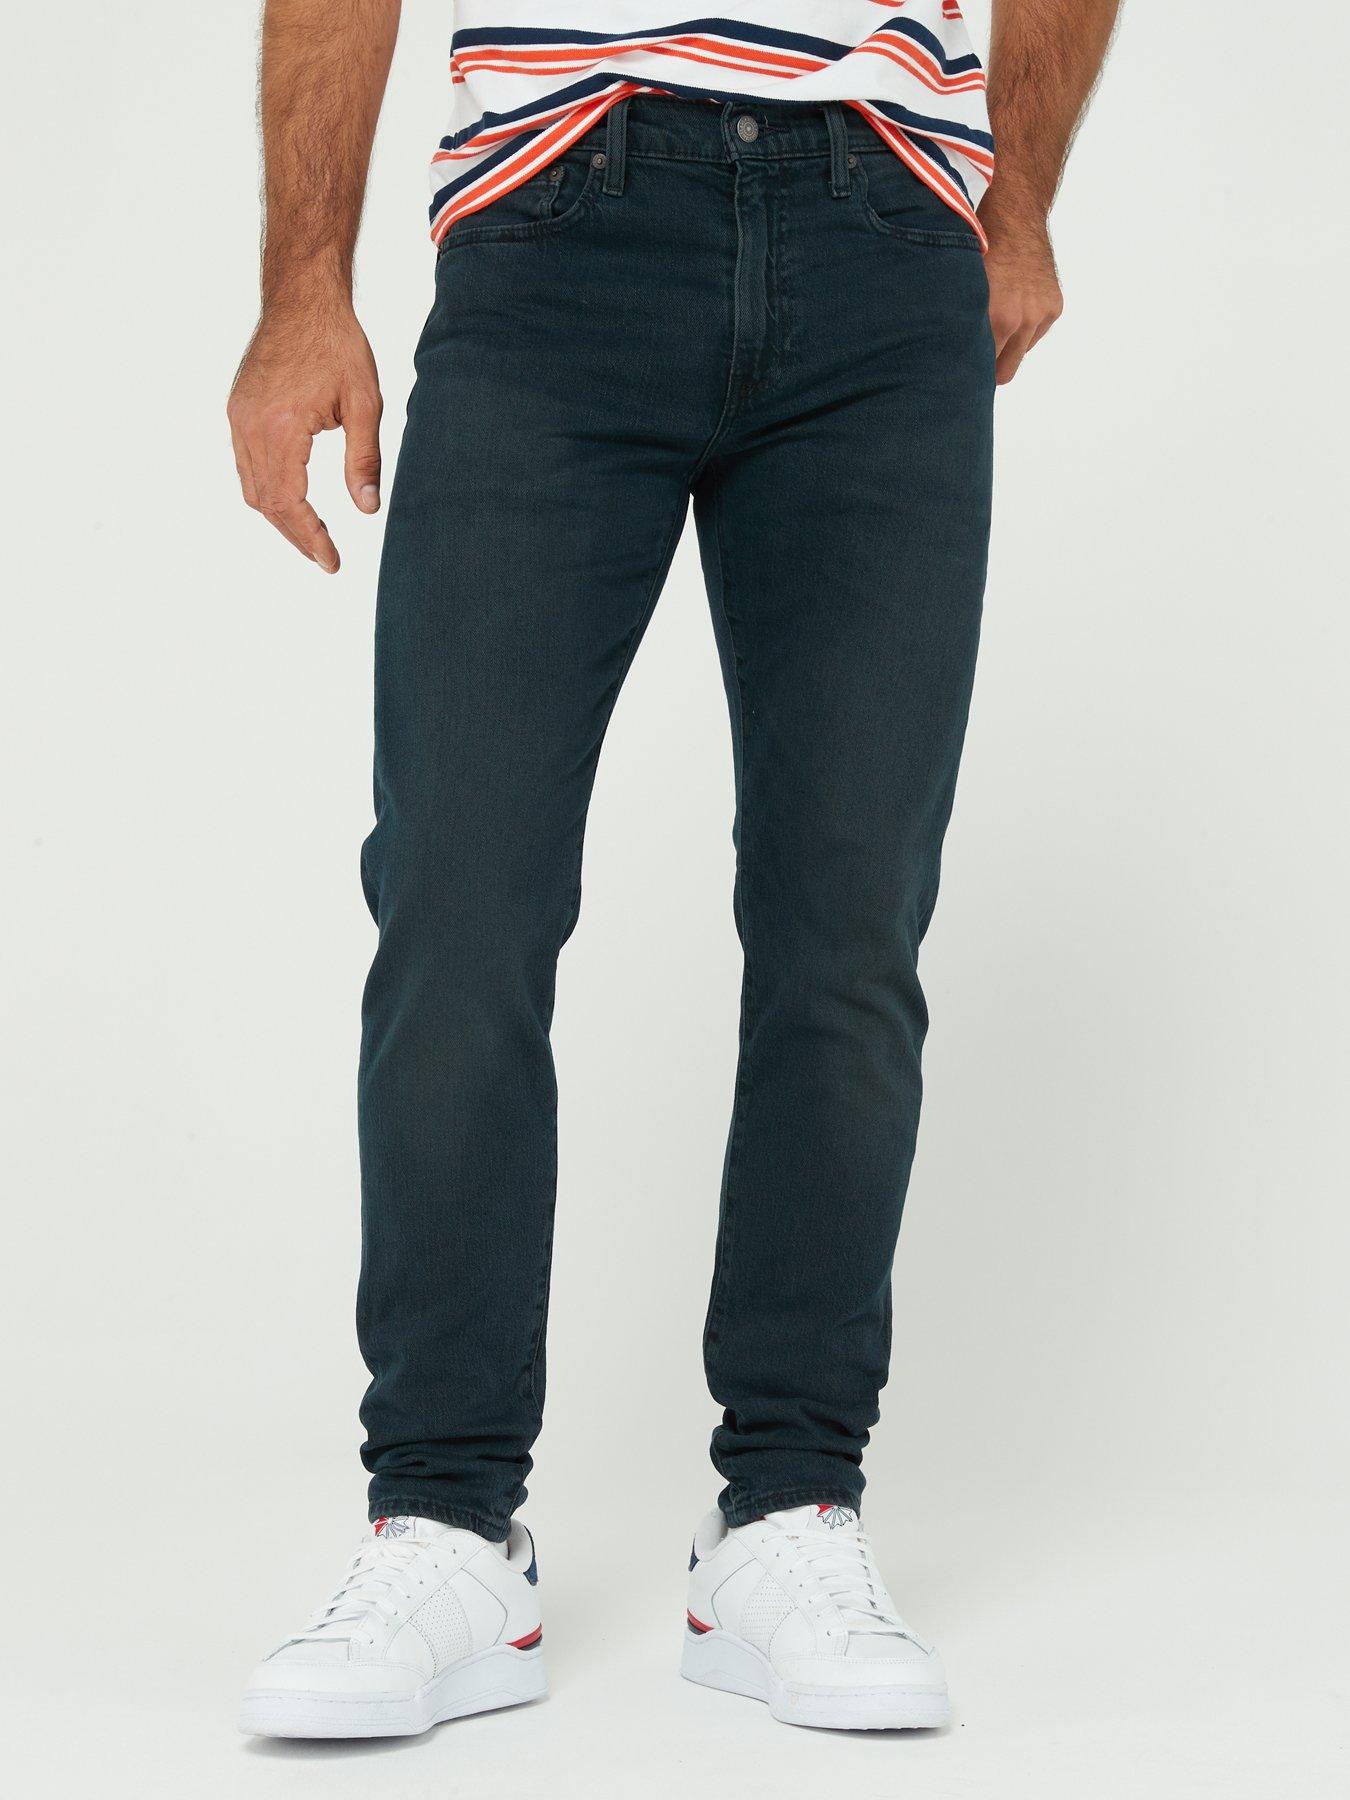 512™ Slim Taper Fit Men's Jeans - Medium Wash